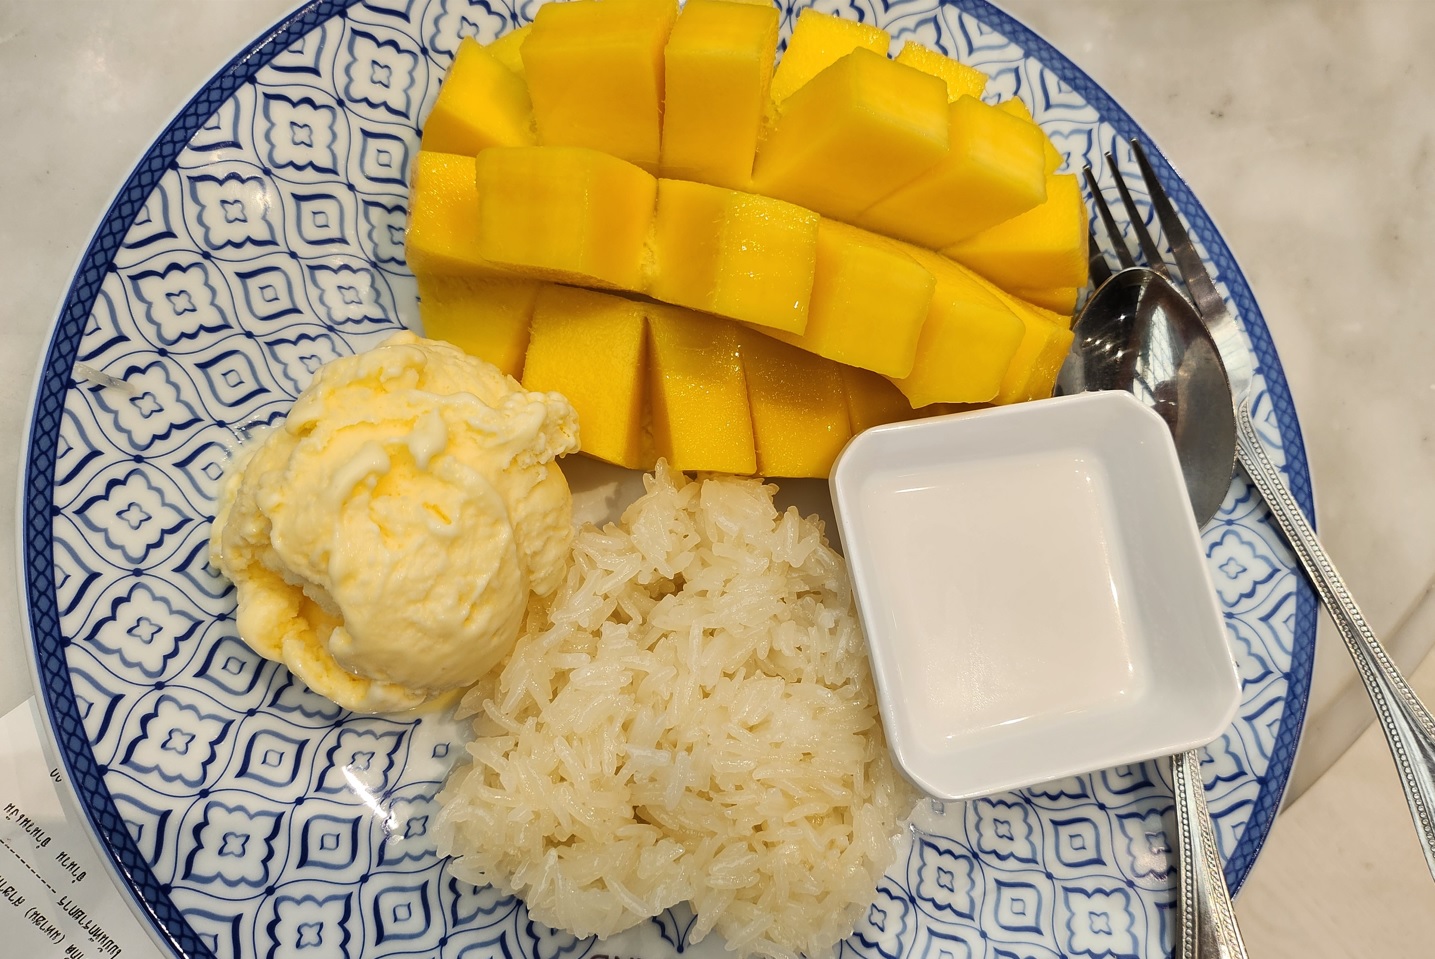 Mango sticky rice with ice cream